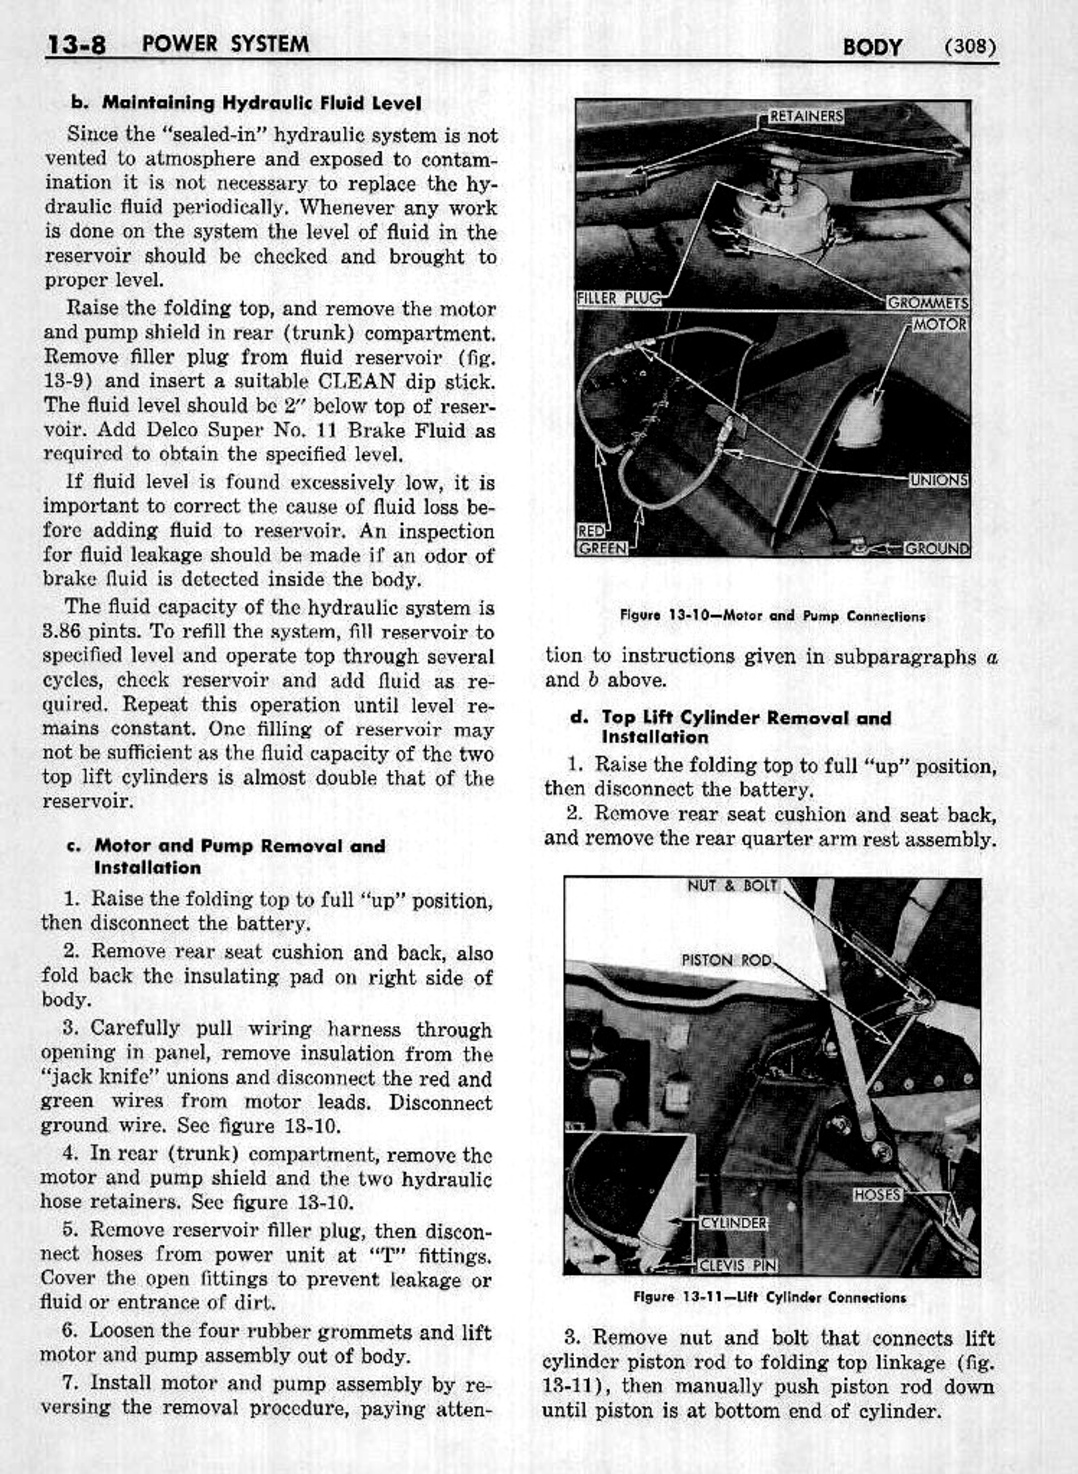 n_14 1953 Buick Shop Manual - Body-008-008.jpg